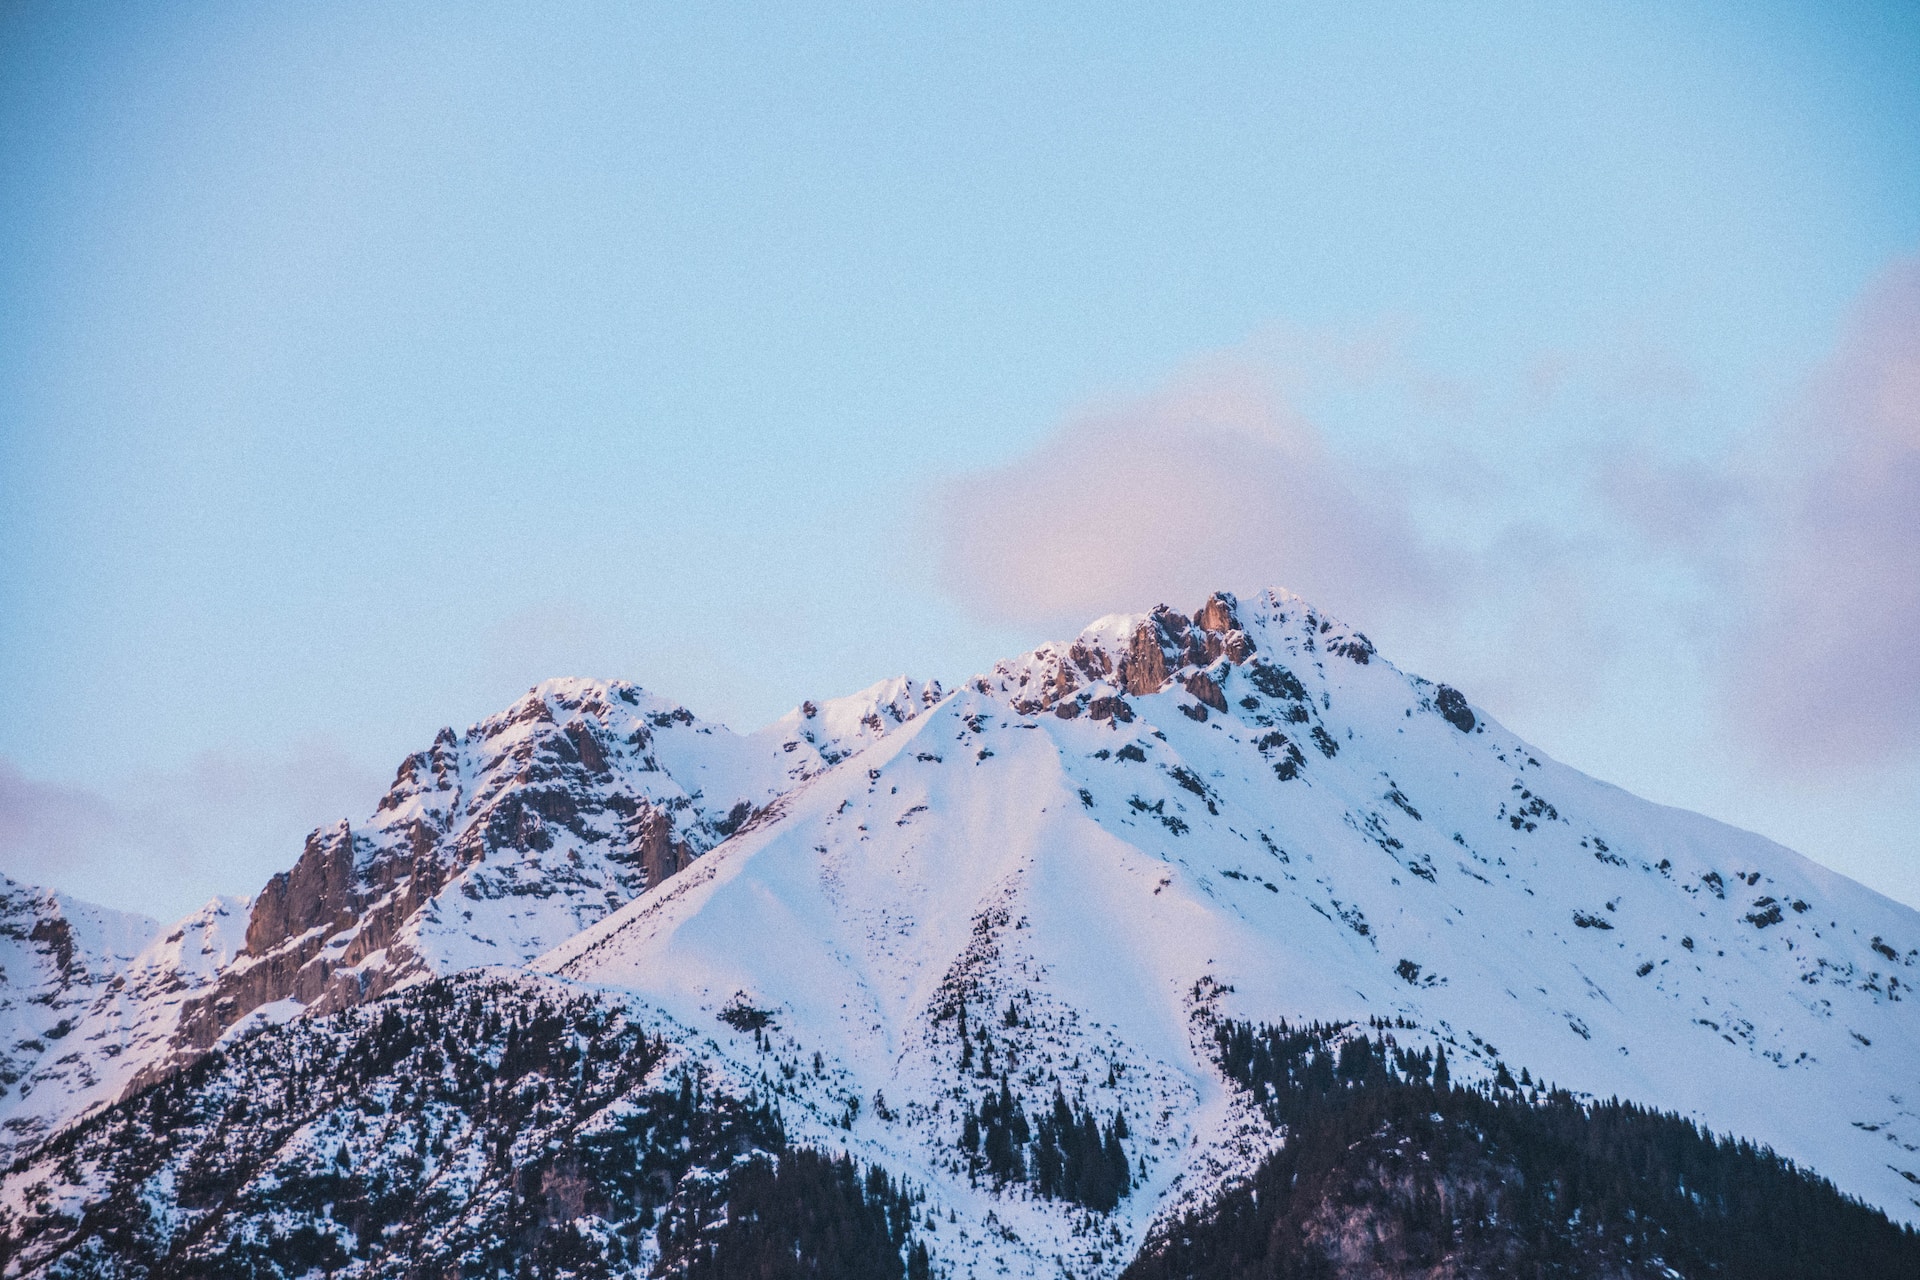 An alpine mountain